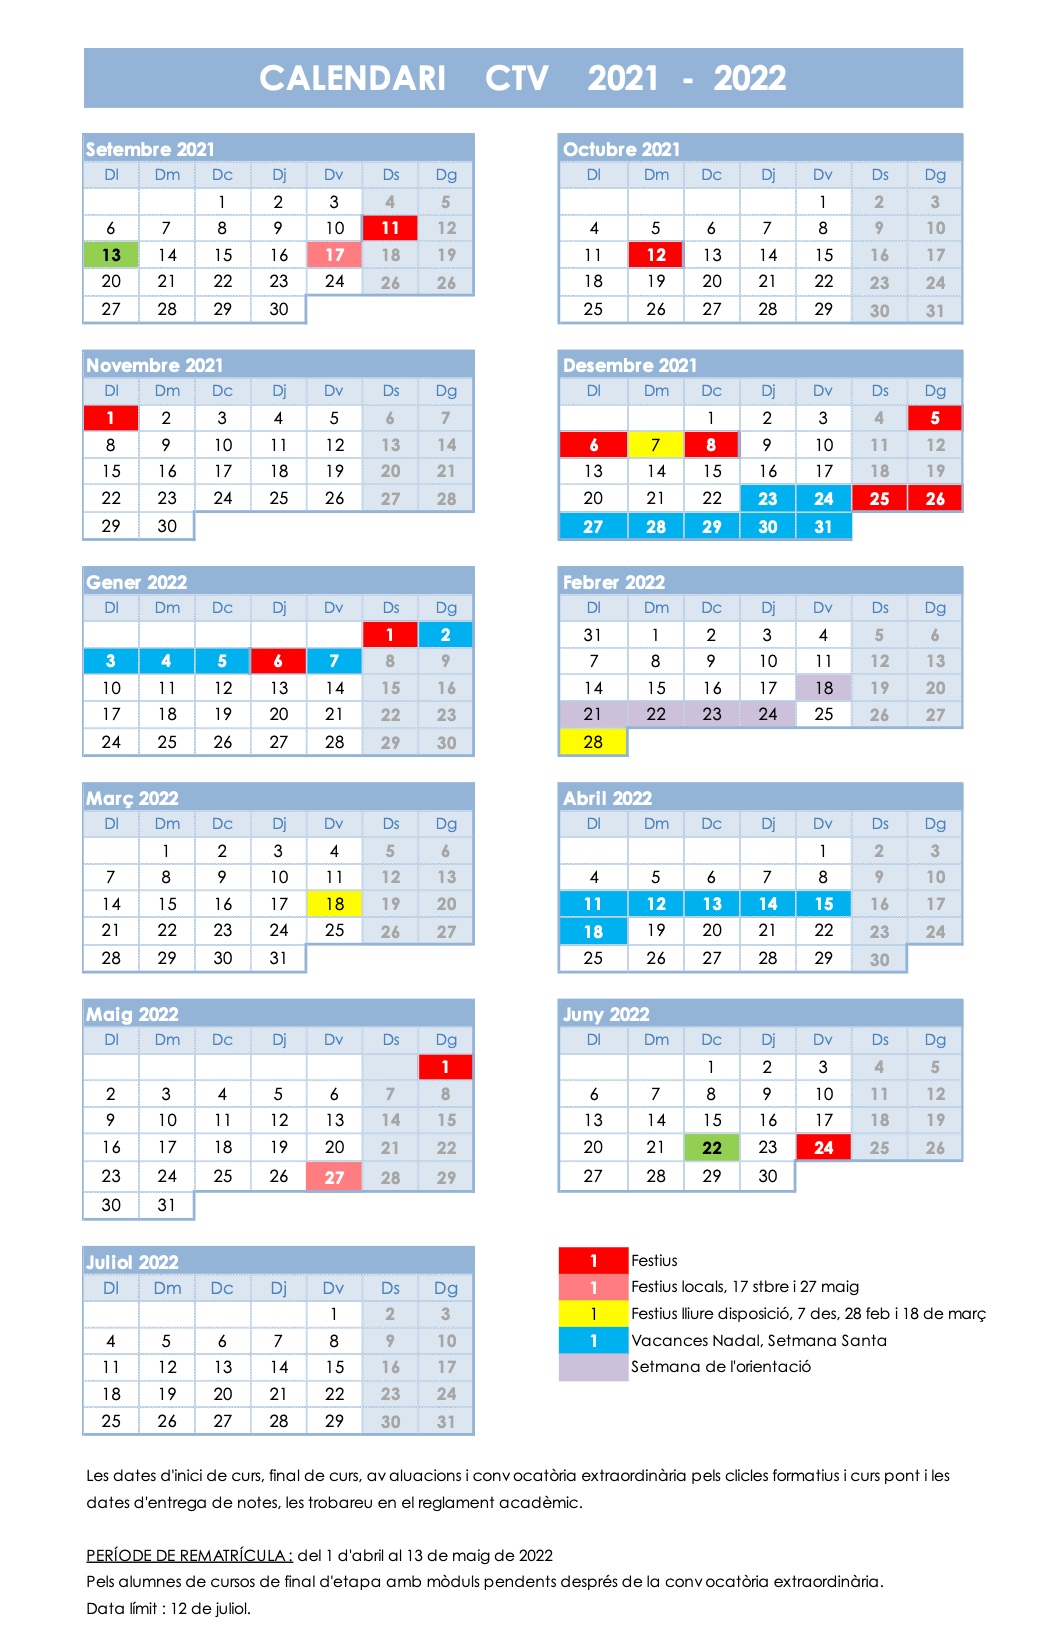 Calendario escolar CTV curs 2021-2022